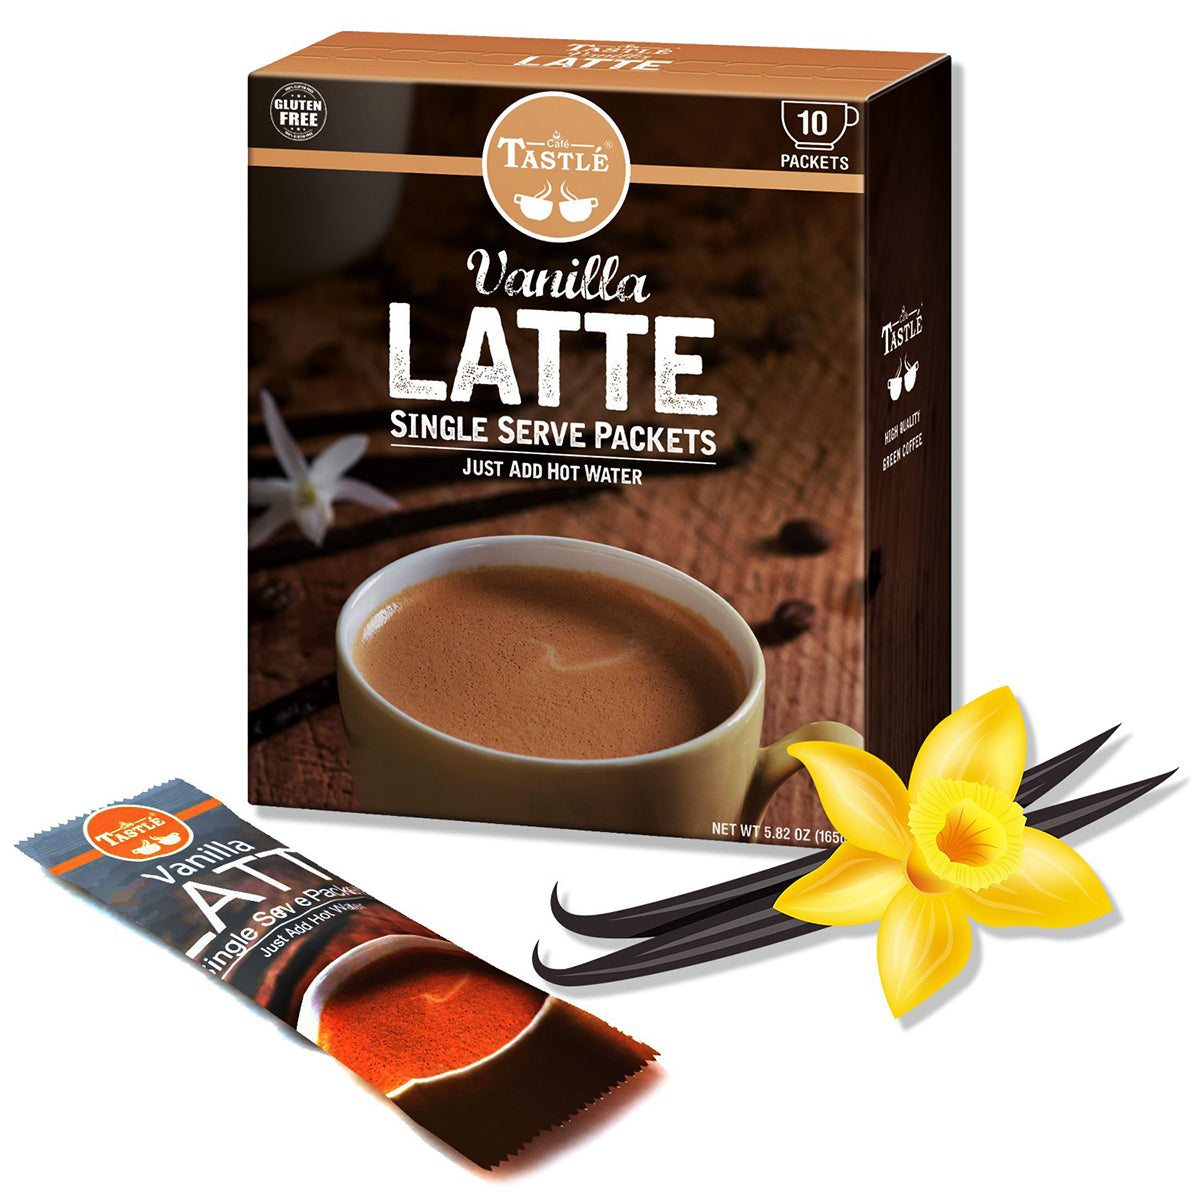 Cafe Tastle Cappuccino, Vanilla Latte, Caramel Macchiato Variety Pack, 30  Count 